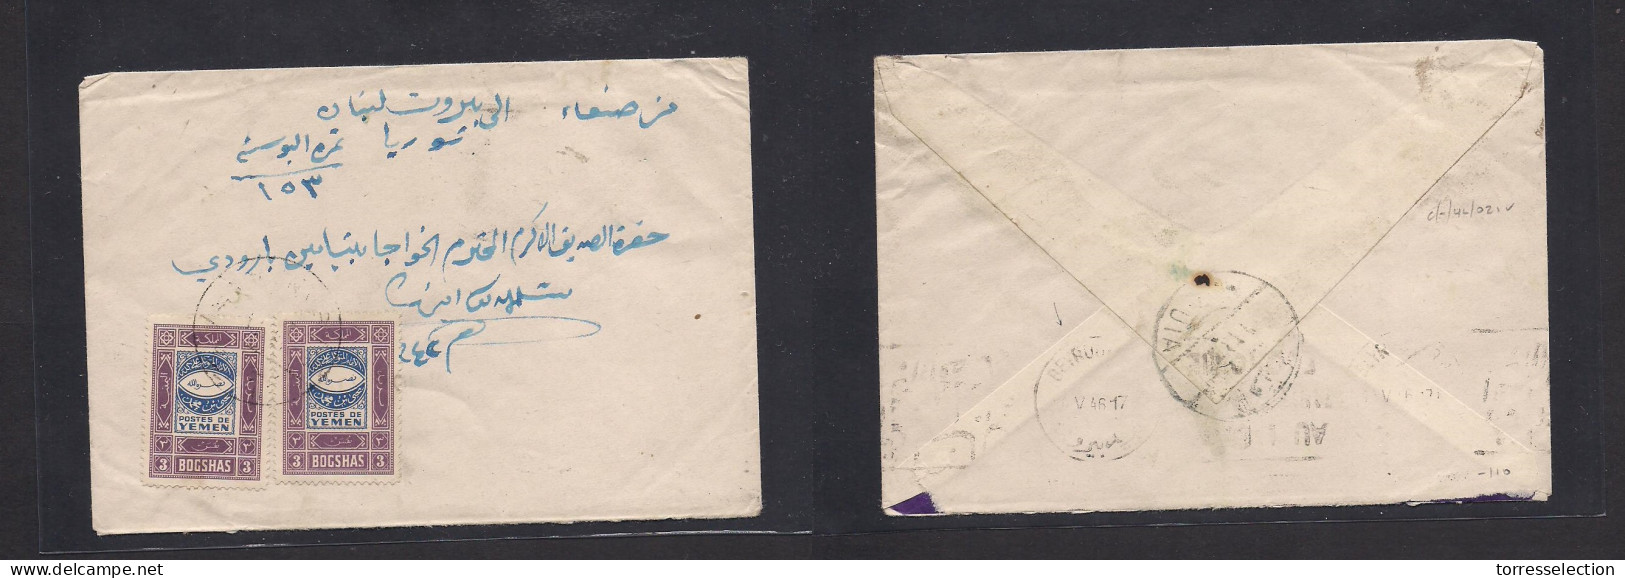 YEMEN. 1940 (May) Sanaa - Lebanon, Beyrouth (May 46) Via Madia. Fkd Comercial Envelope. 6 Bogshas Rate Usage, Tied Cds.  - Yemen